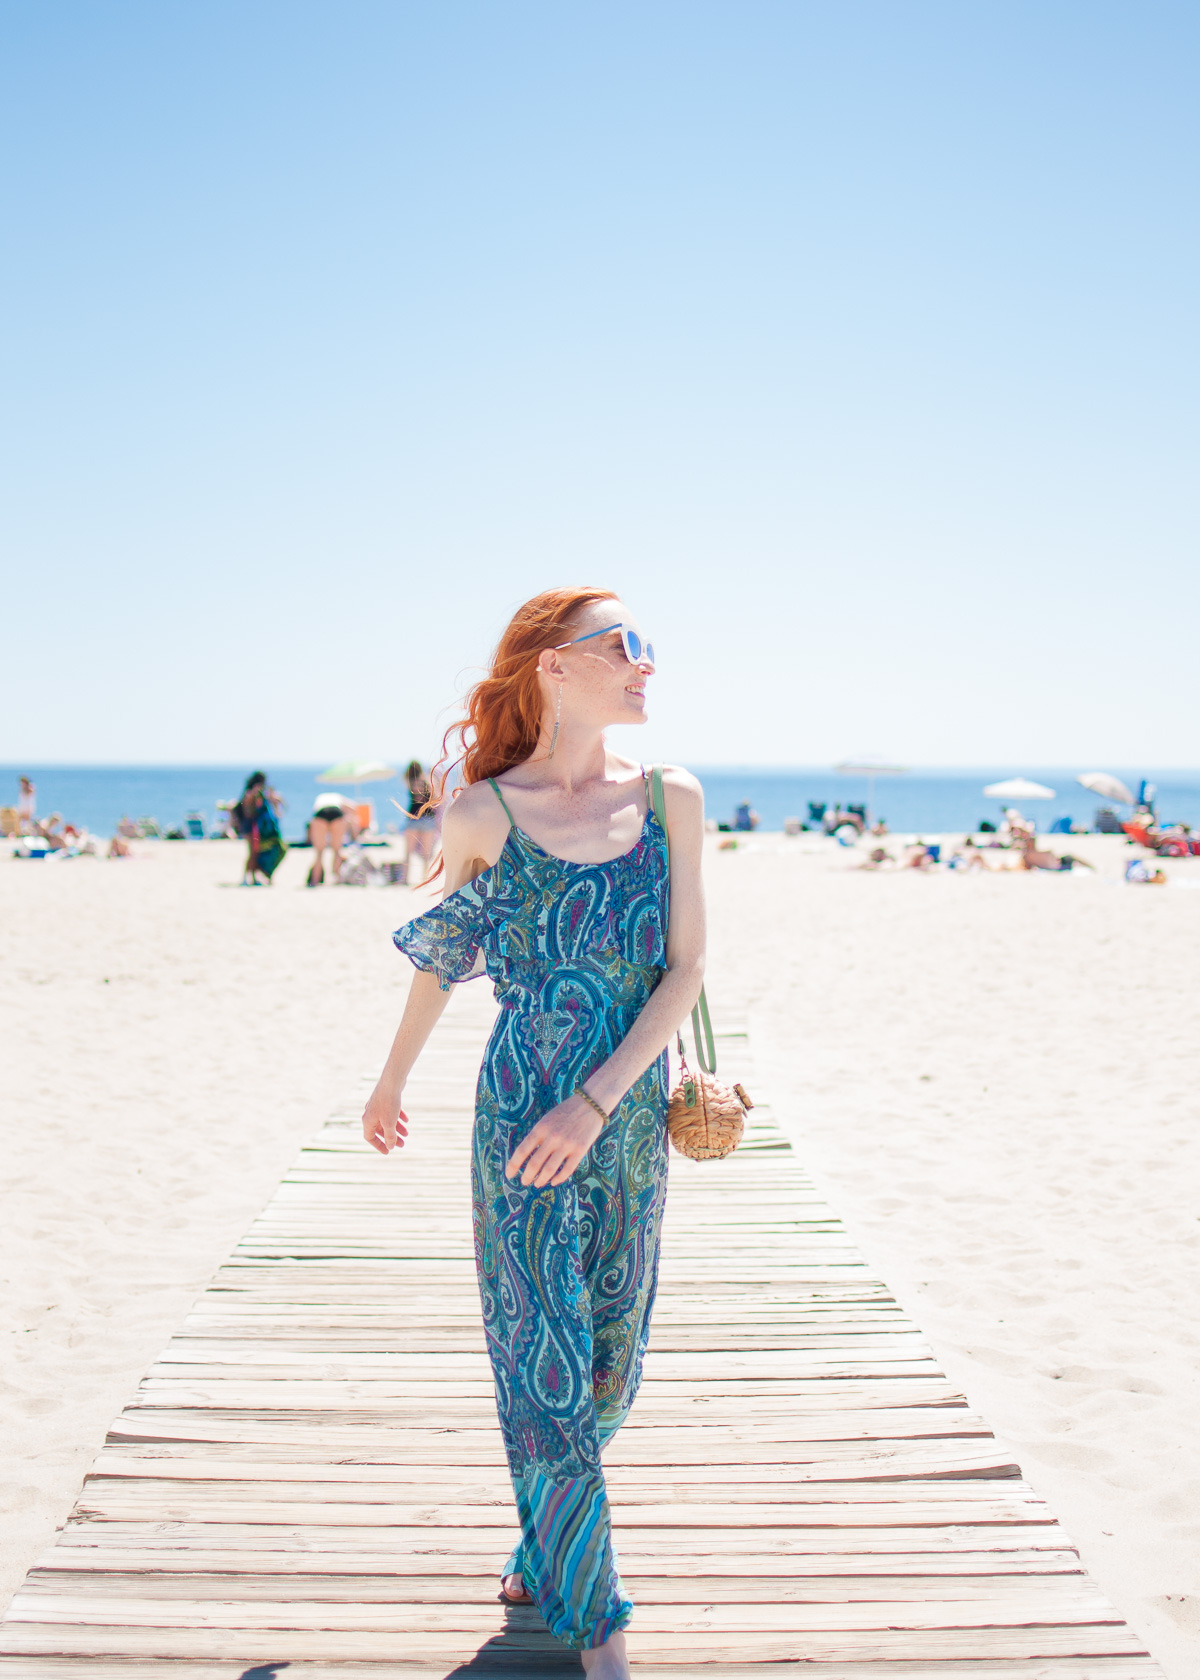 Sandra Darren paisley print maxi dress with Sun N' Sand clutch and Quay Australia sunglasses